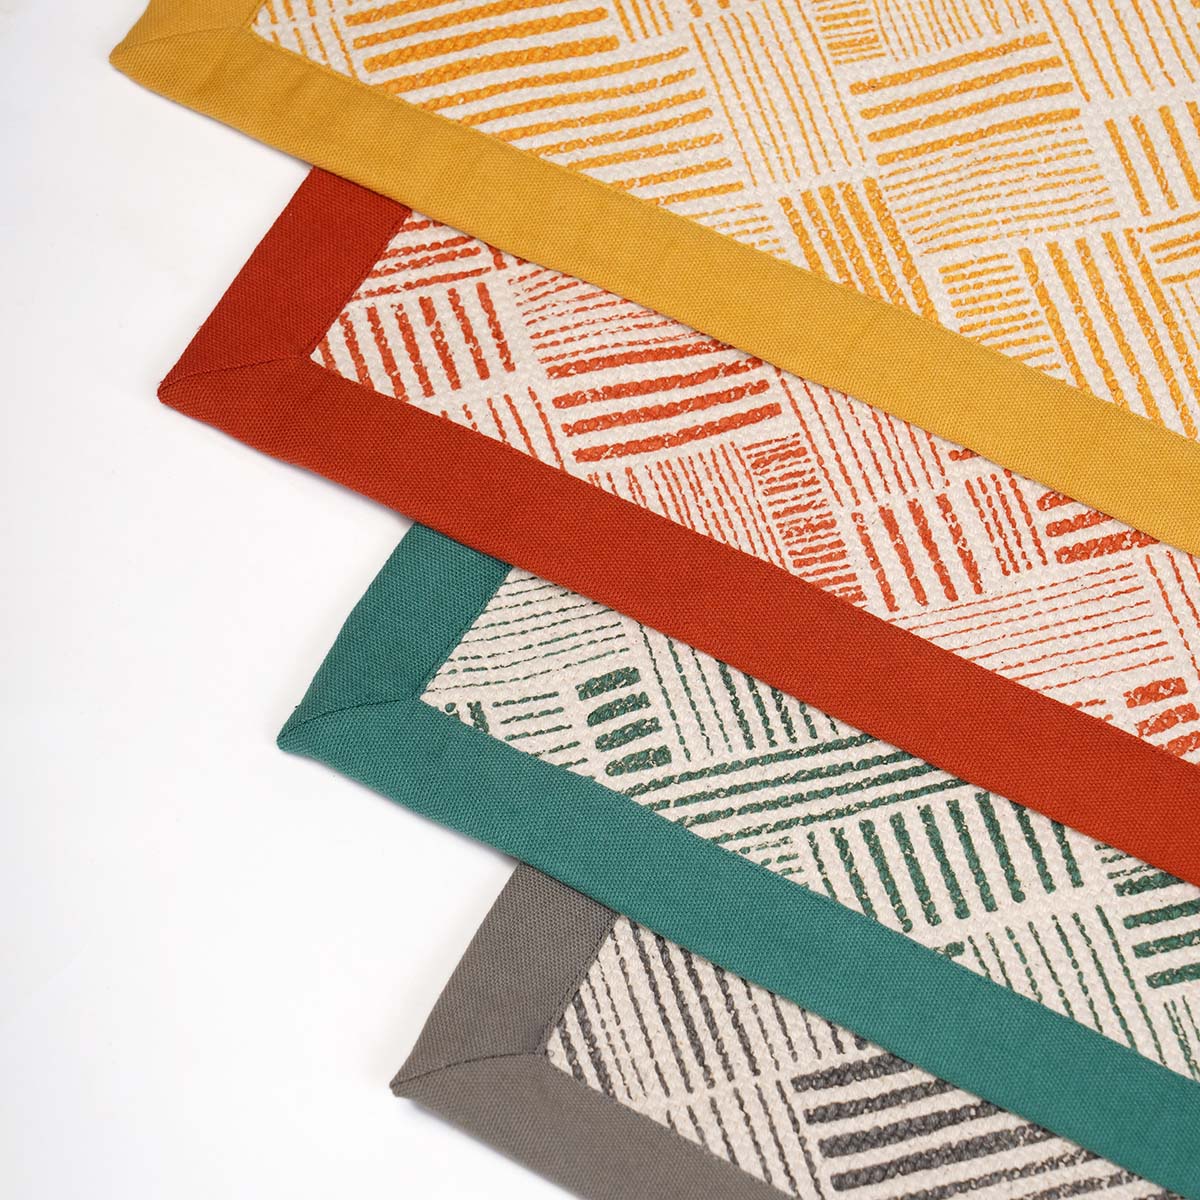 MODERN RETRO - Terracotta cotton rug, stripe print, mid century modern, sizes available